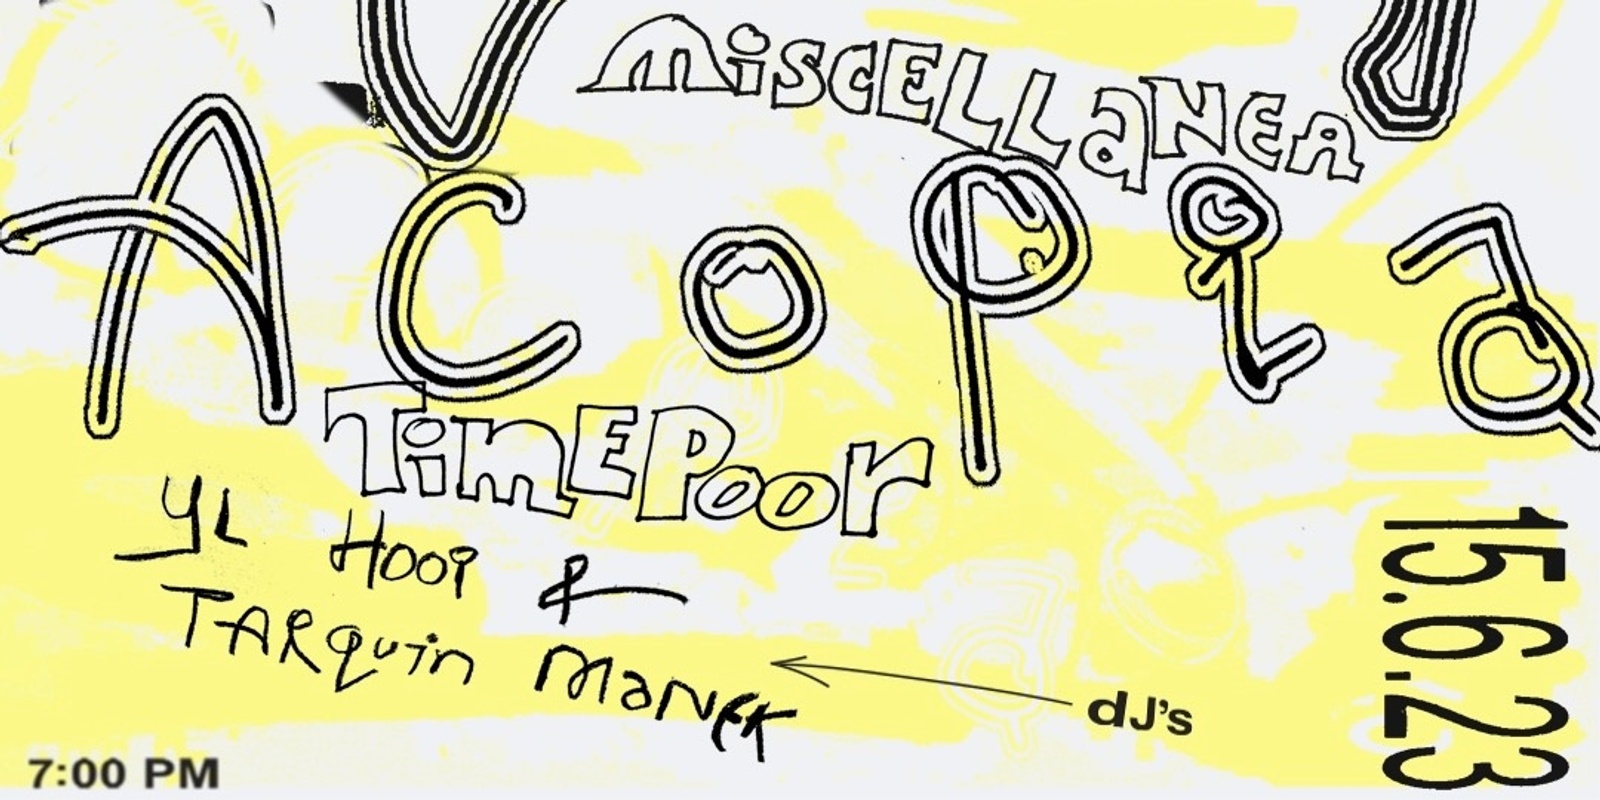 Acopia Single Launch w/ Timepoor (Live) YL Hooi & Tarquin Manek (DJ)